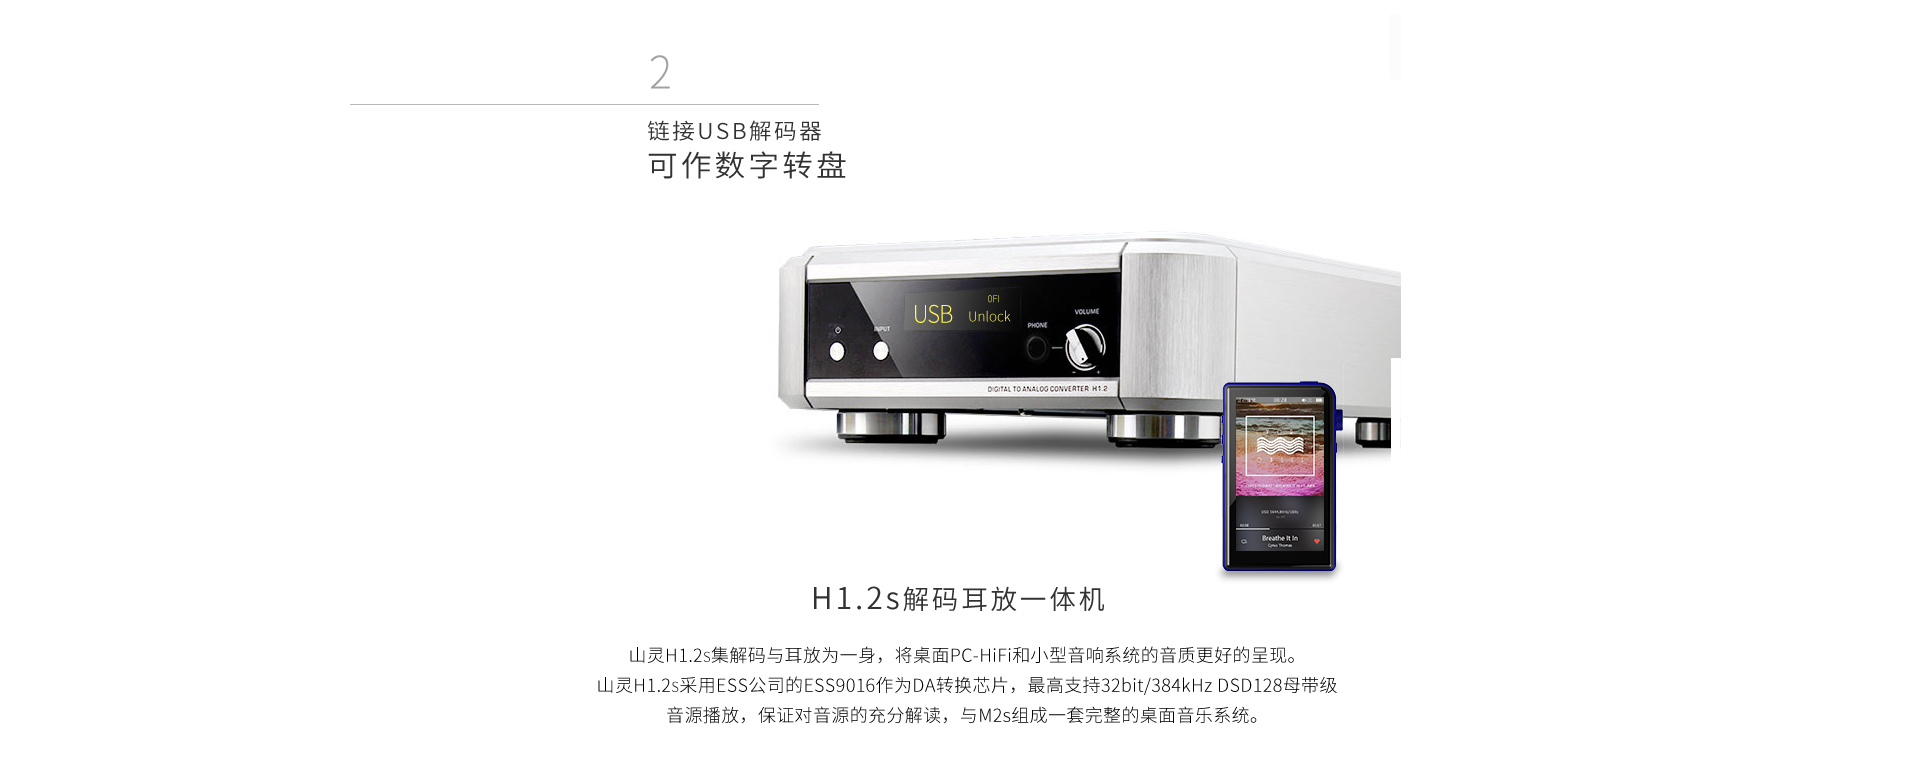 M2s便携音乐播放器_深圳山灵数码科技发展有限公司